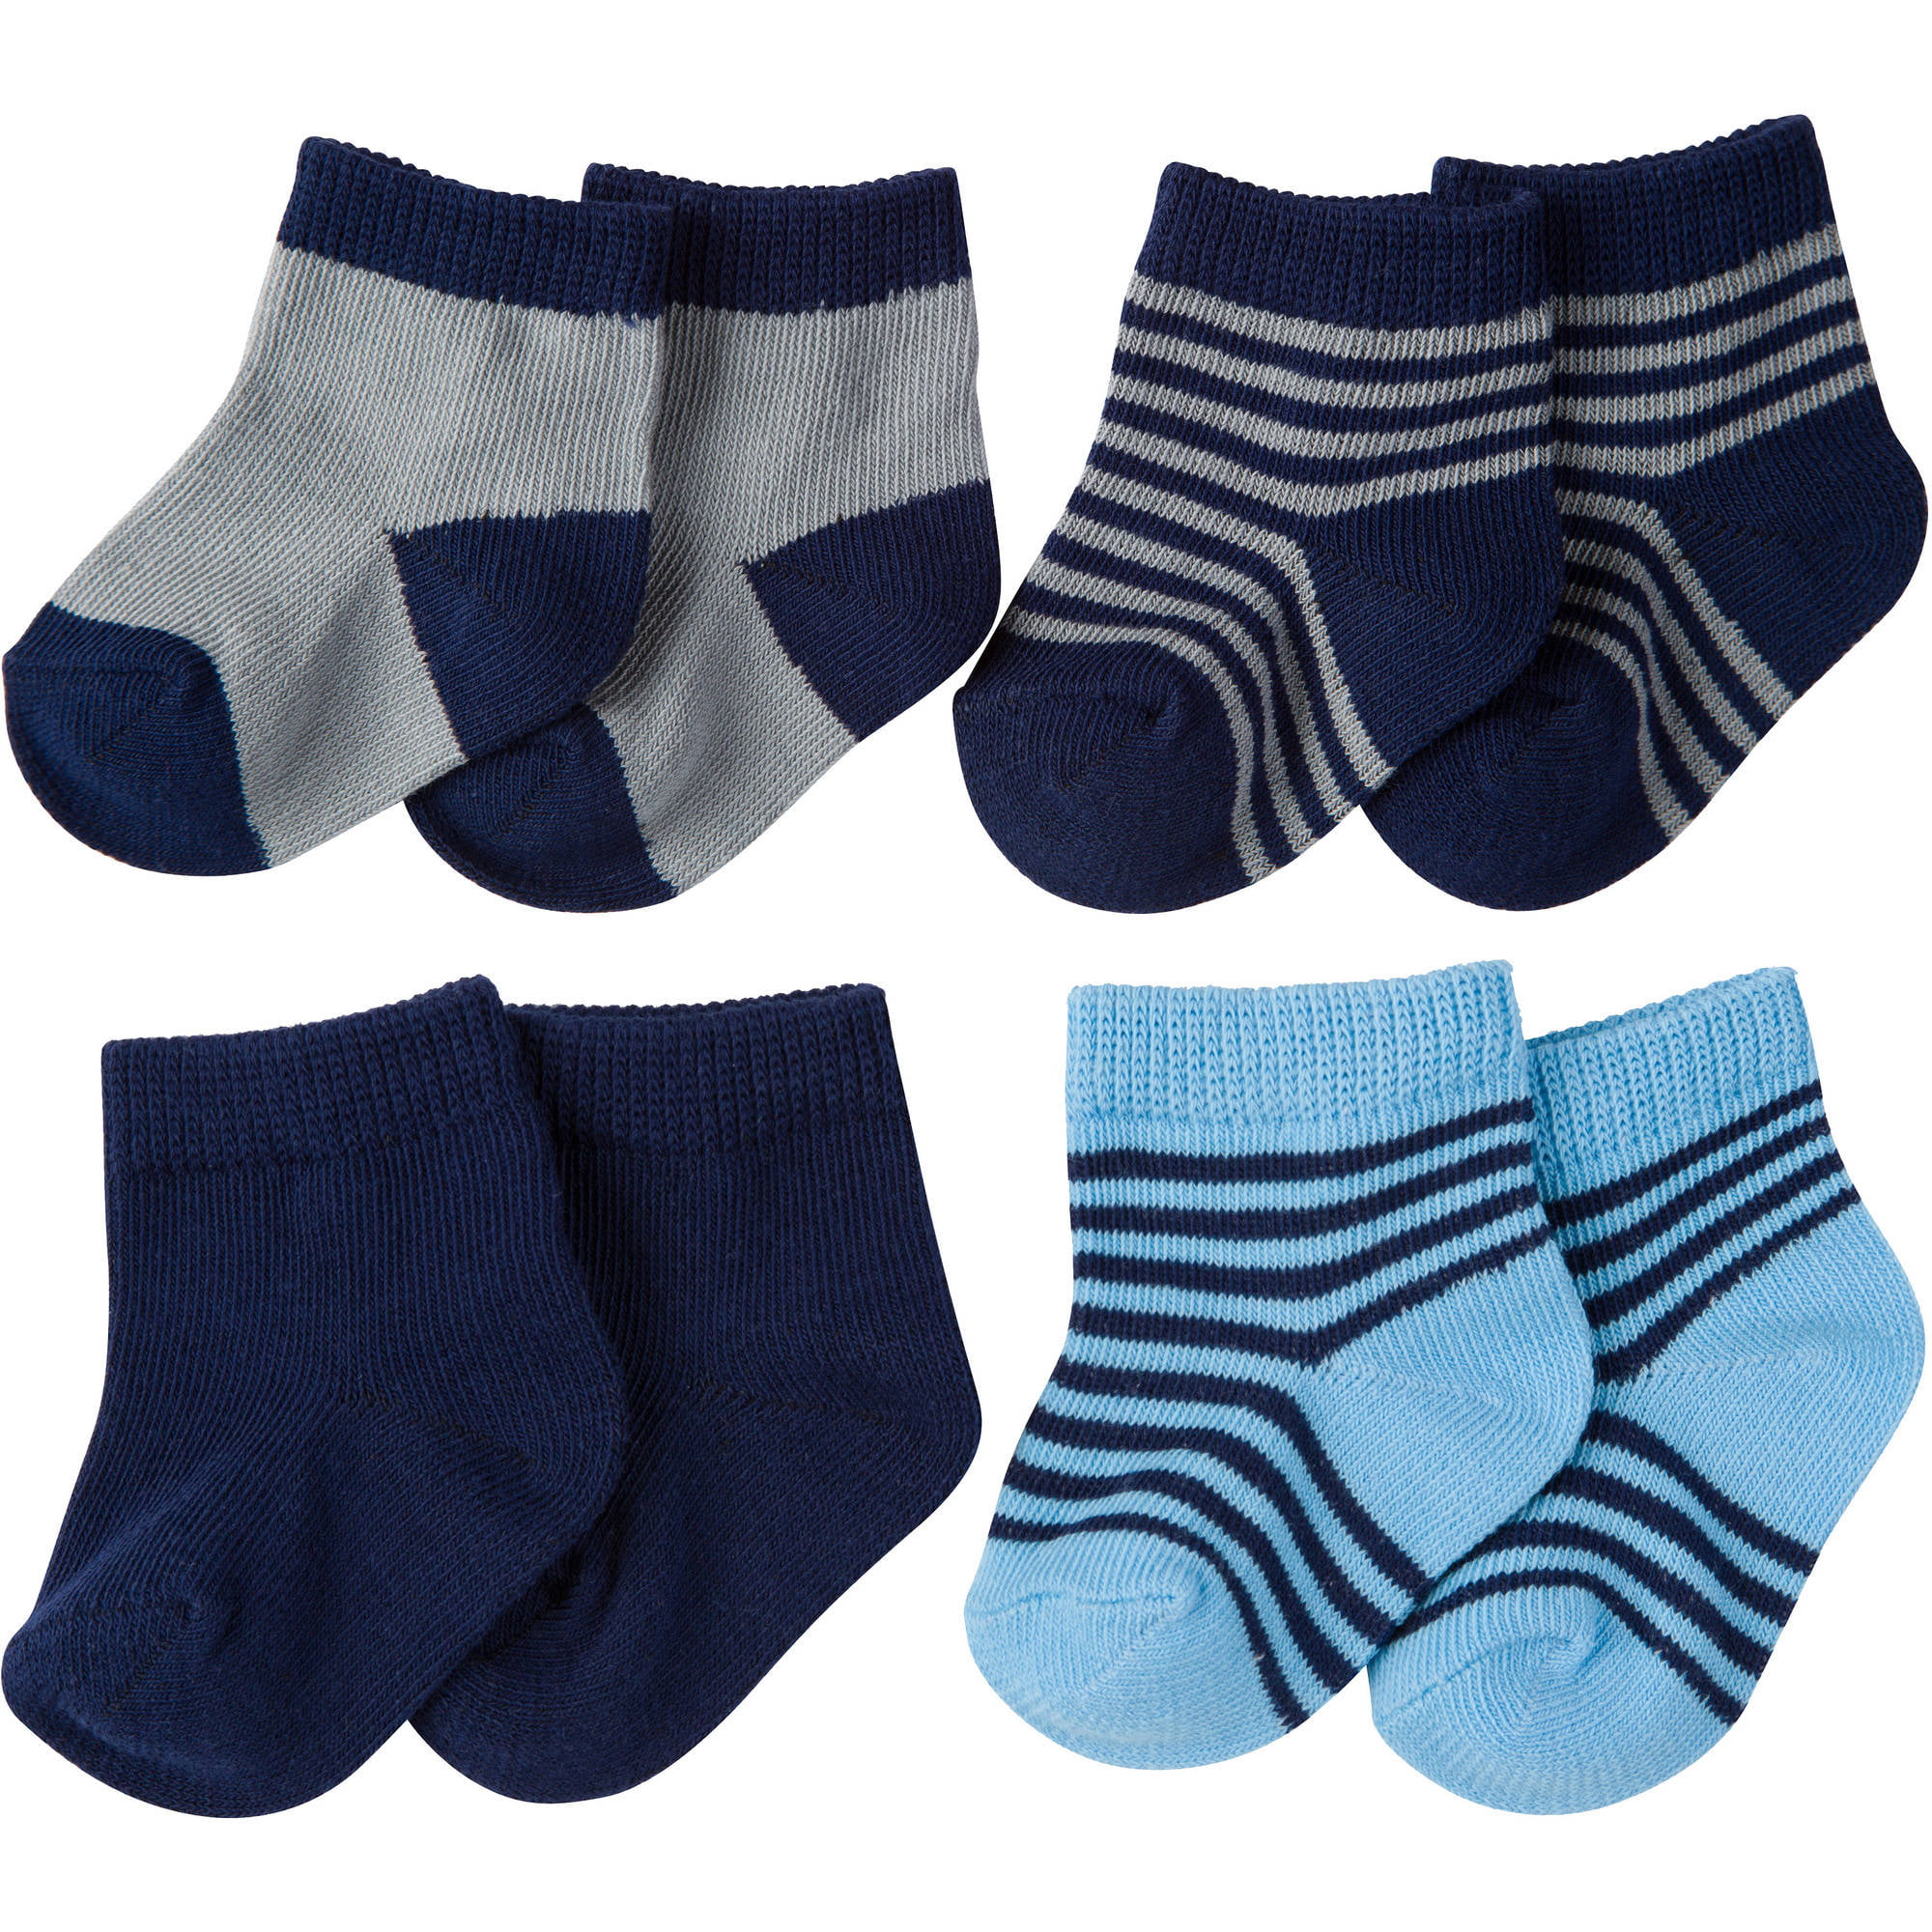 Newborn Baby Boy Ankle sock, 4-Pack - Walmart.com